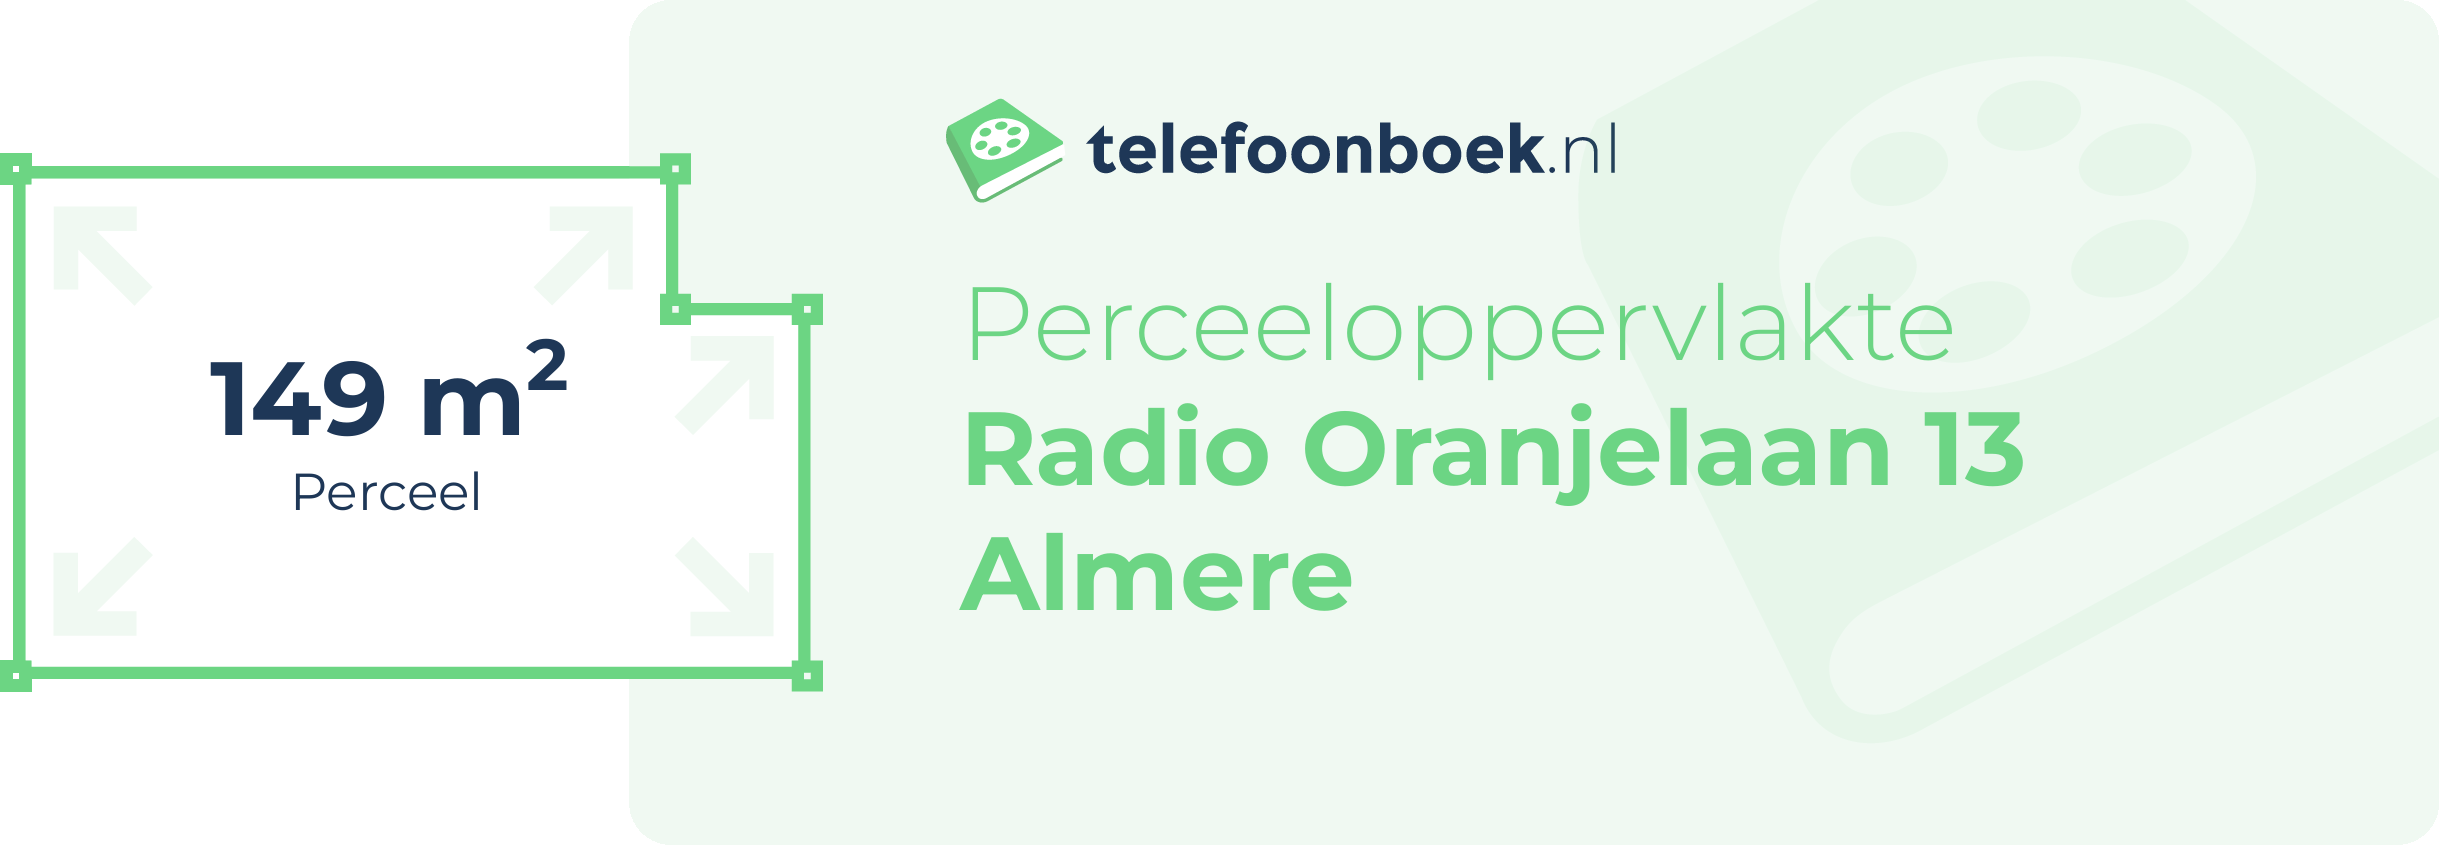 Perceeloppervlakte Radio Oranjelaan 13 Almere